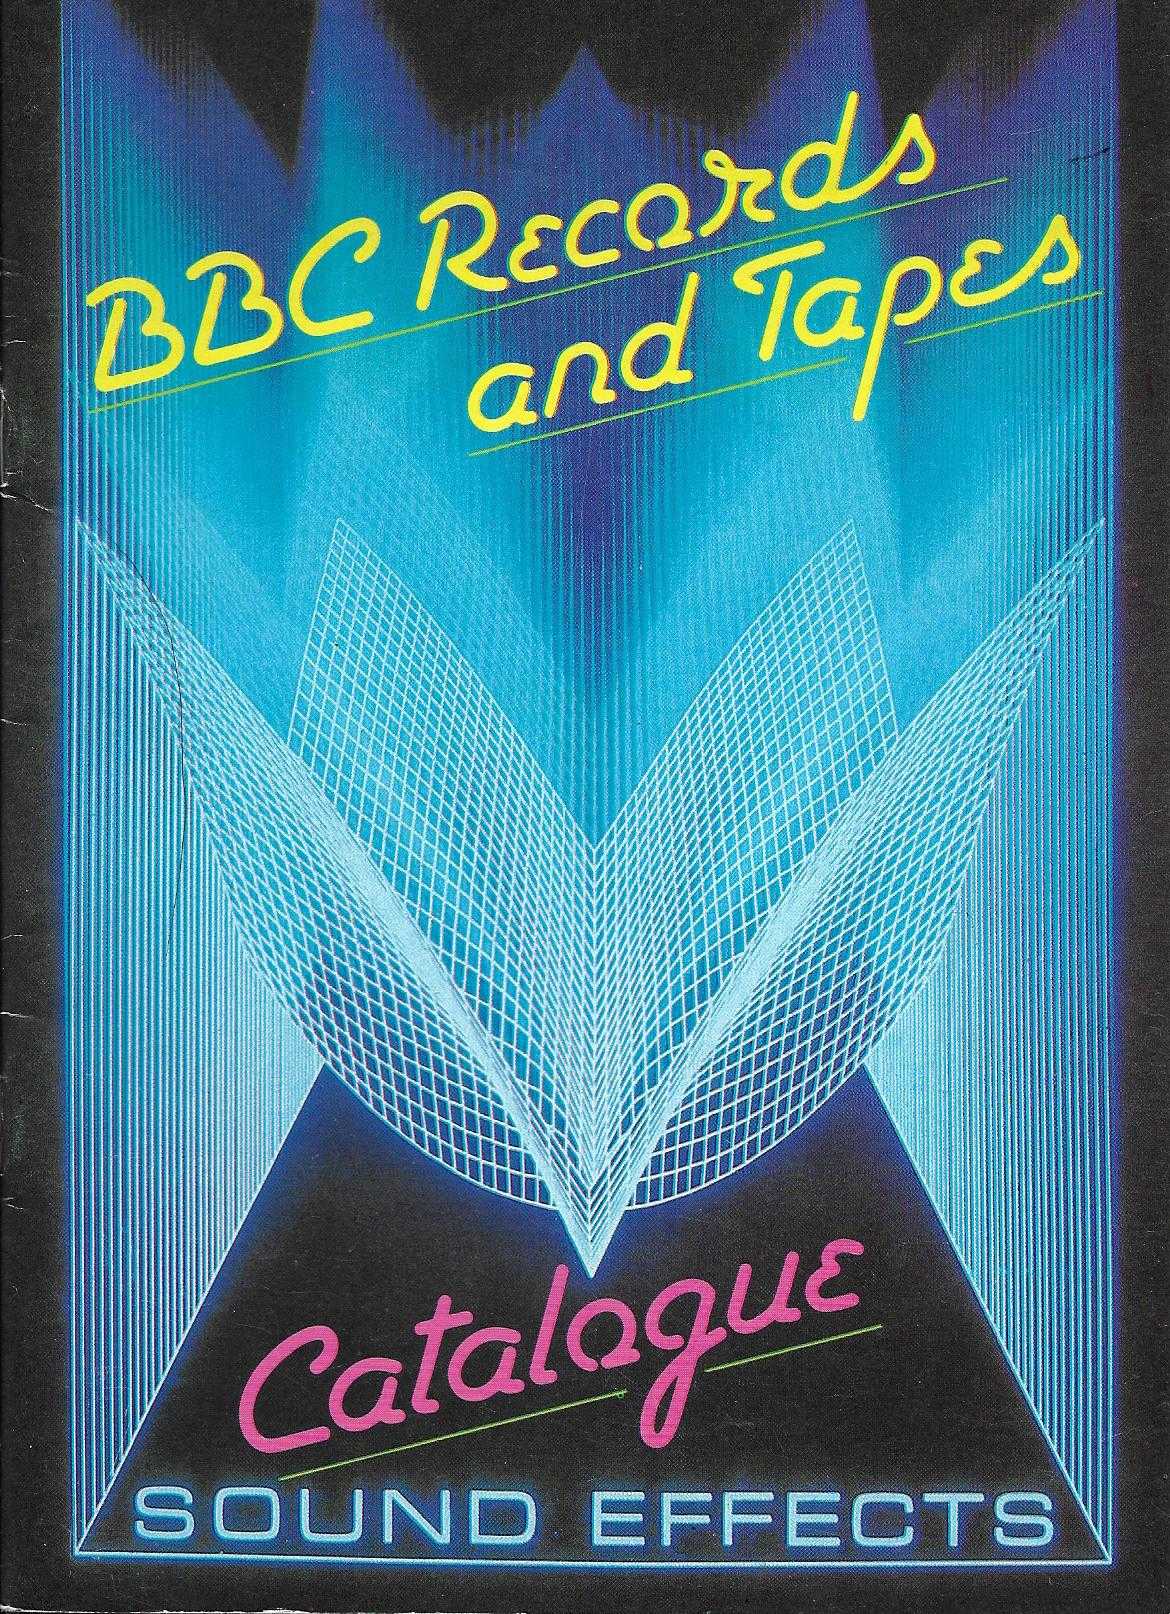 BBC sound effects catalogue 1982.